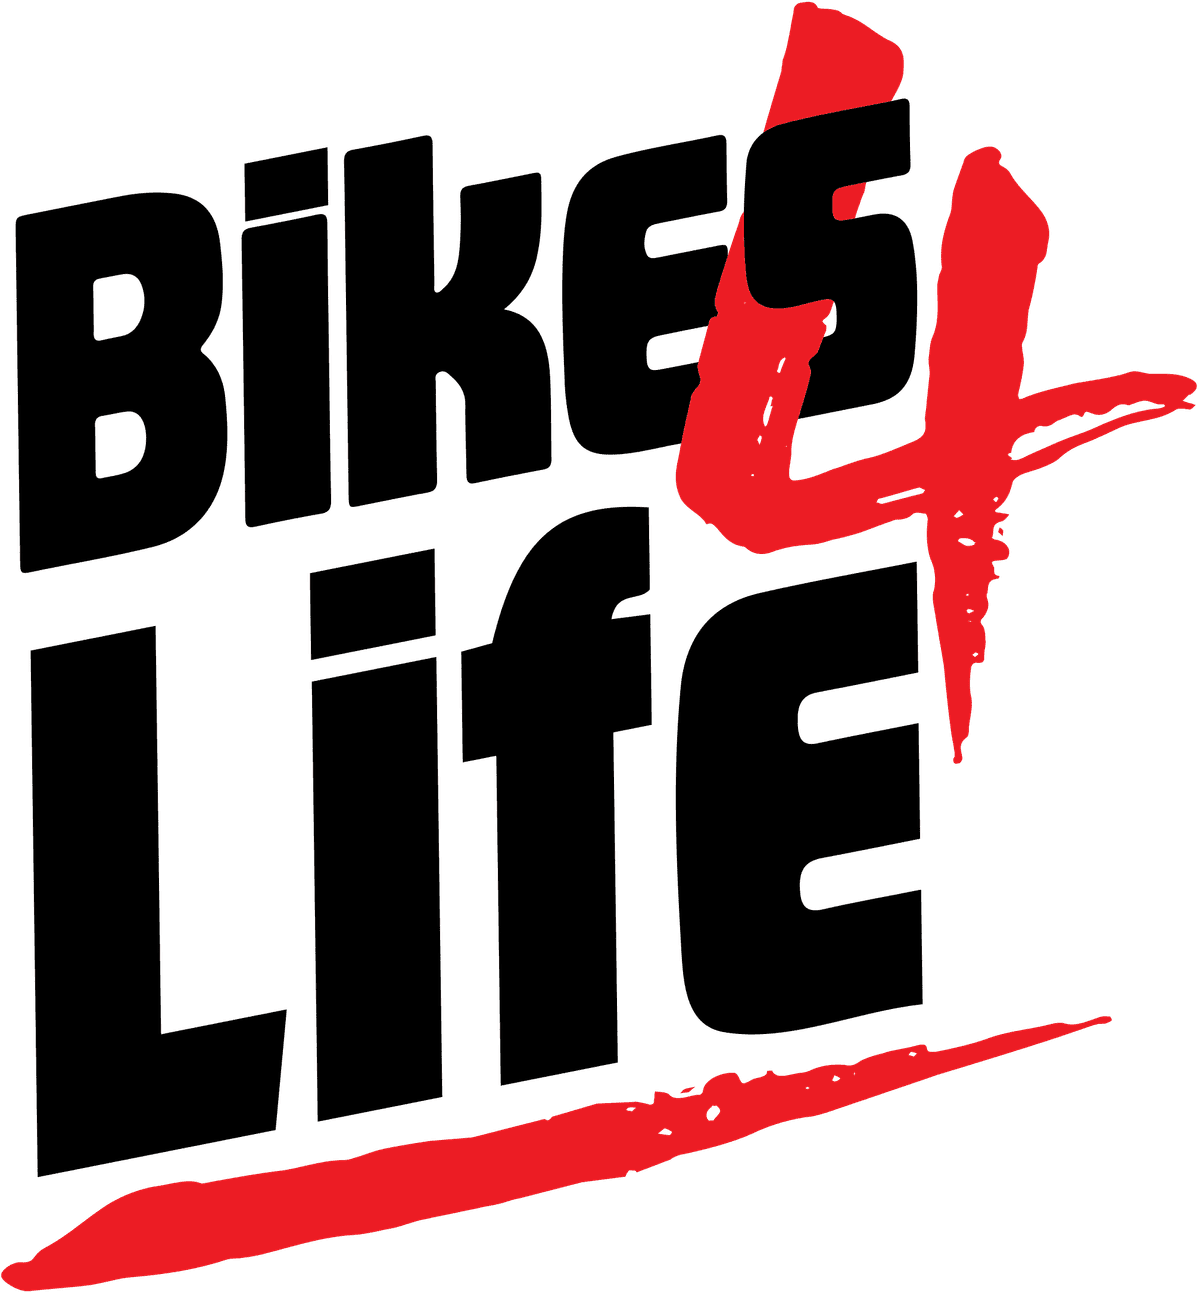 Bikes4Life